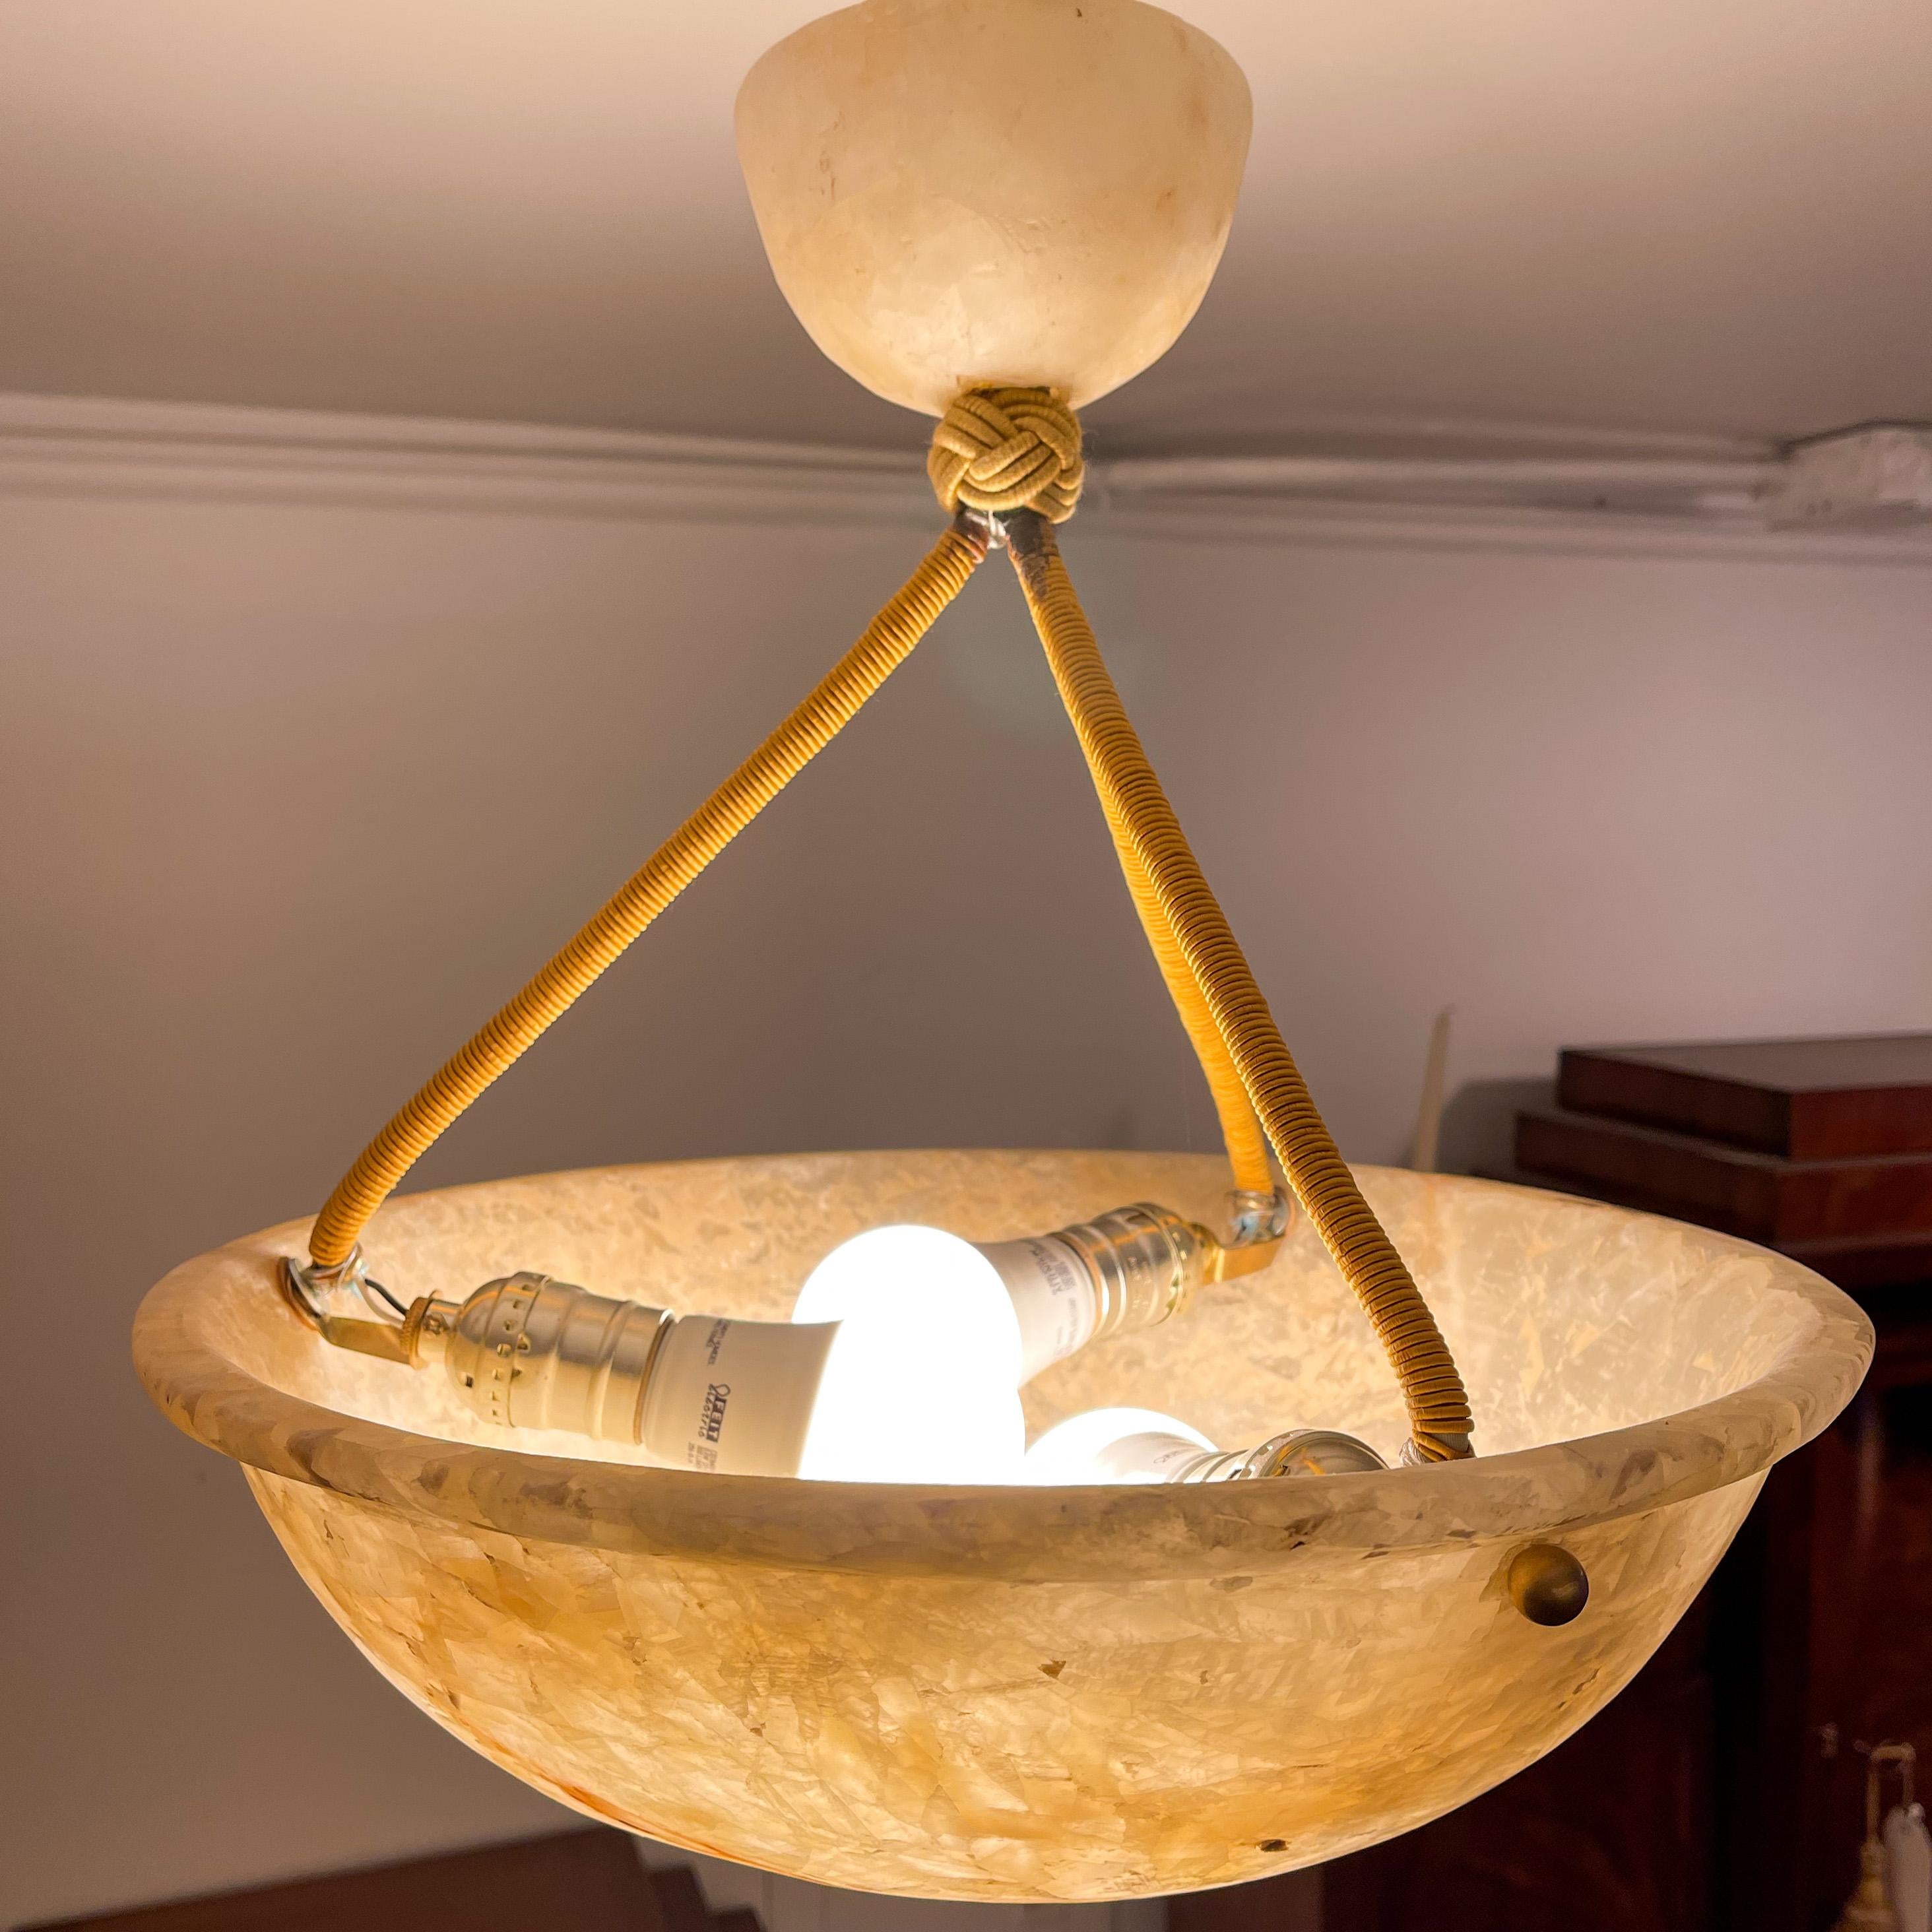 alabaster ceiling lamp